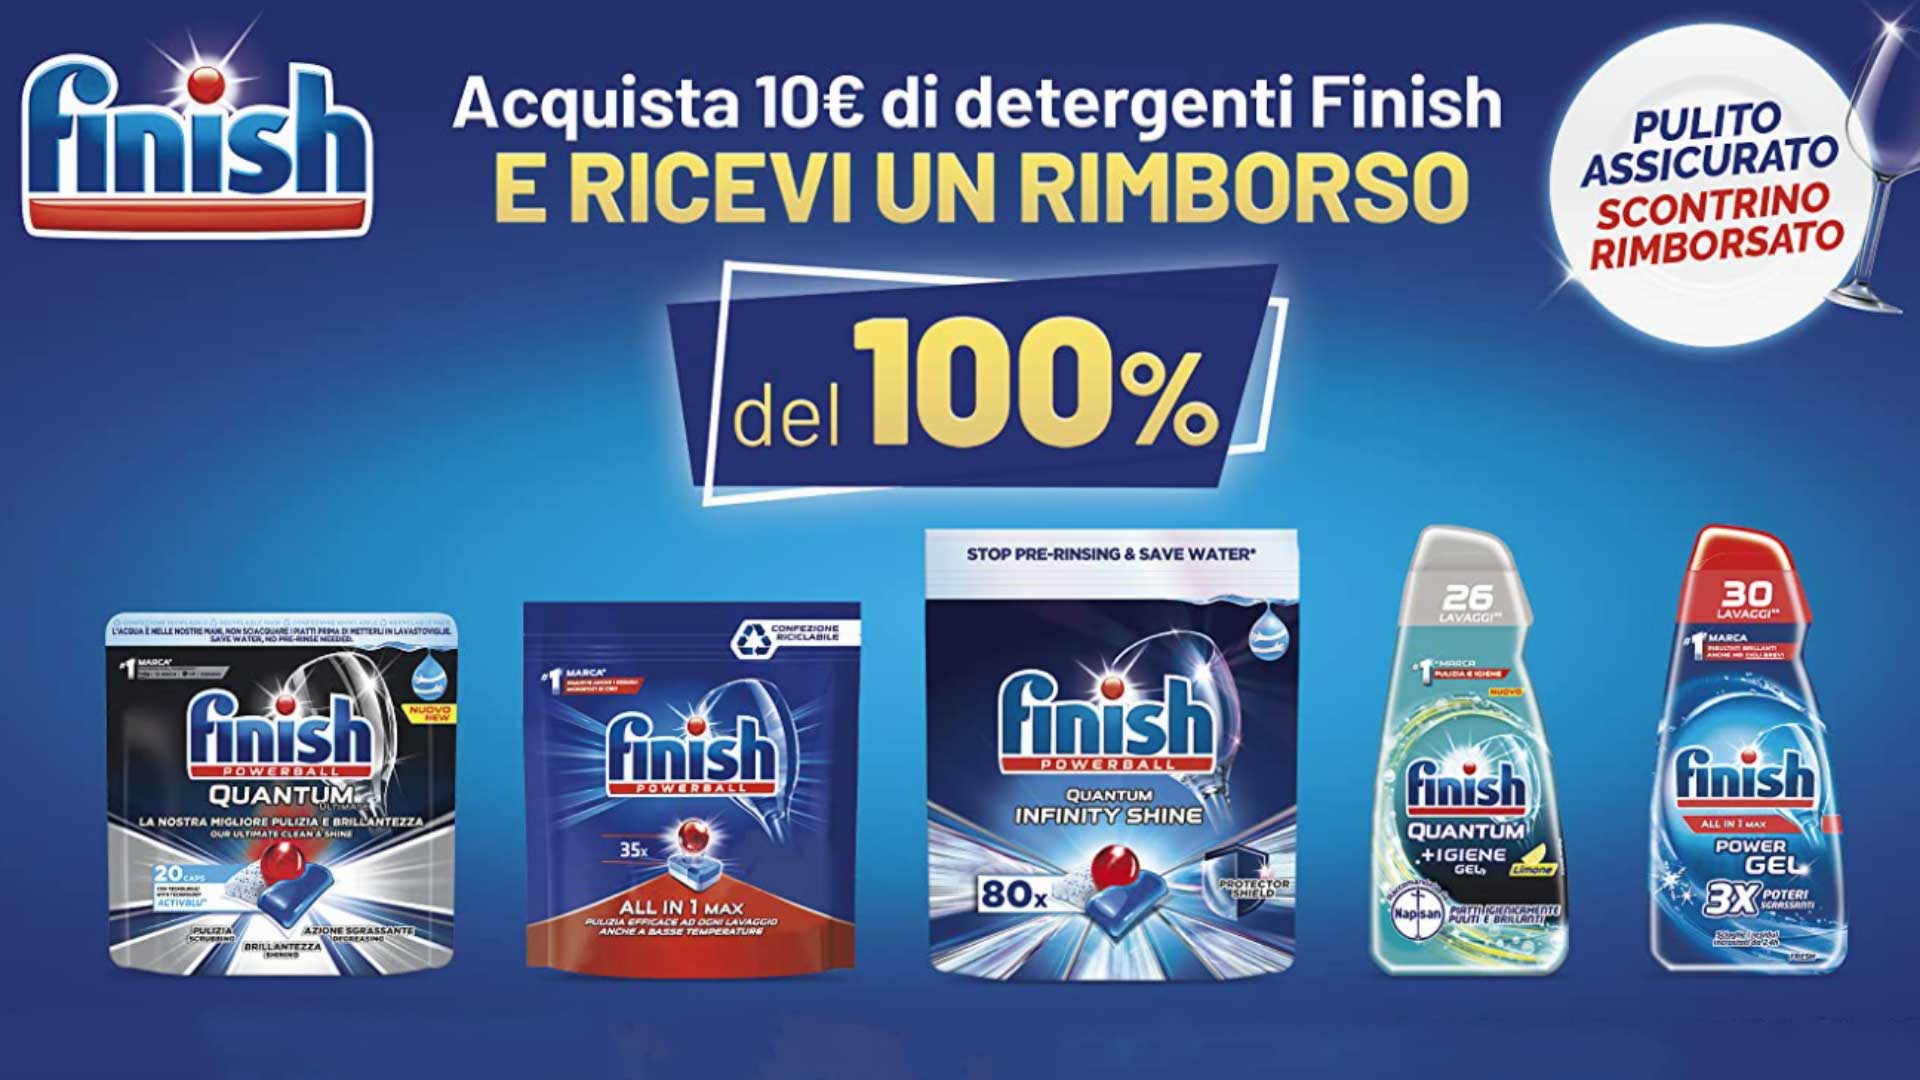 finish cashback rimborso detergenti regolamento